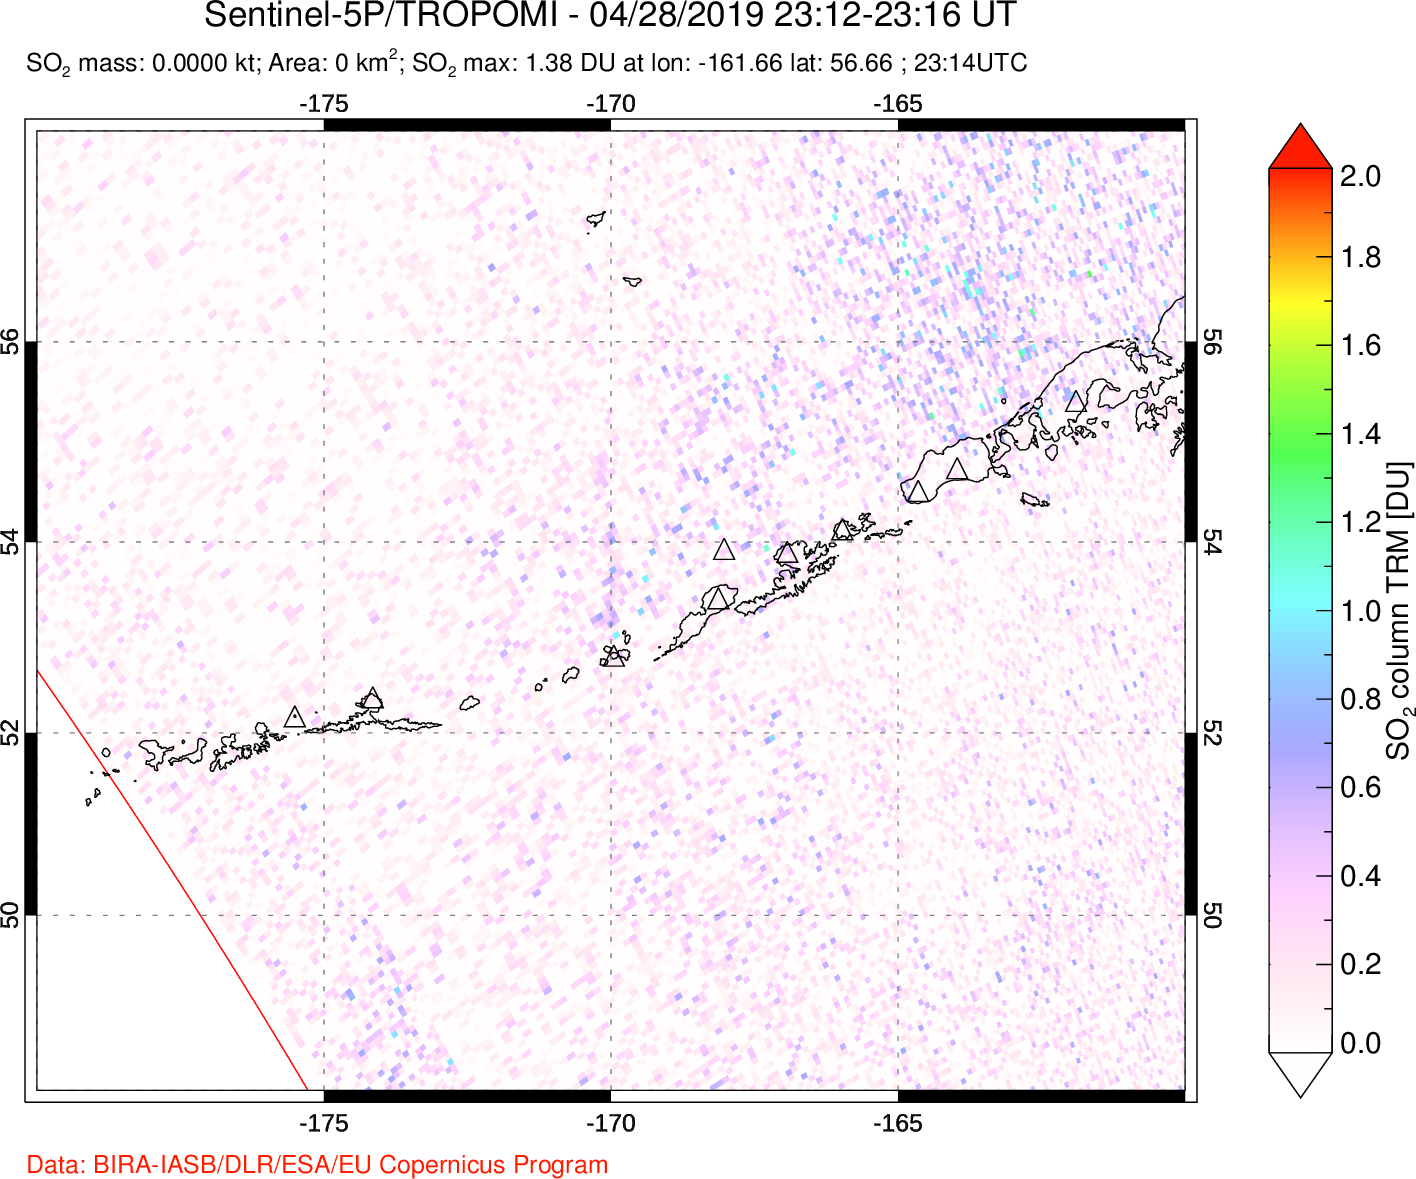 A sulfur dioxide image over Aleutian Islands, Alaska, USA on Apr 28, 2019.